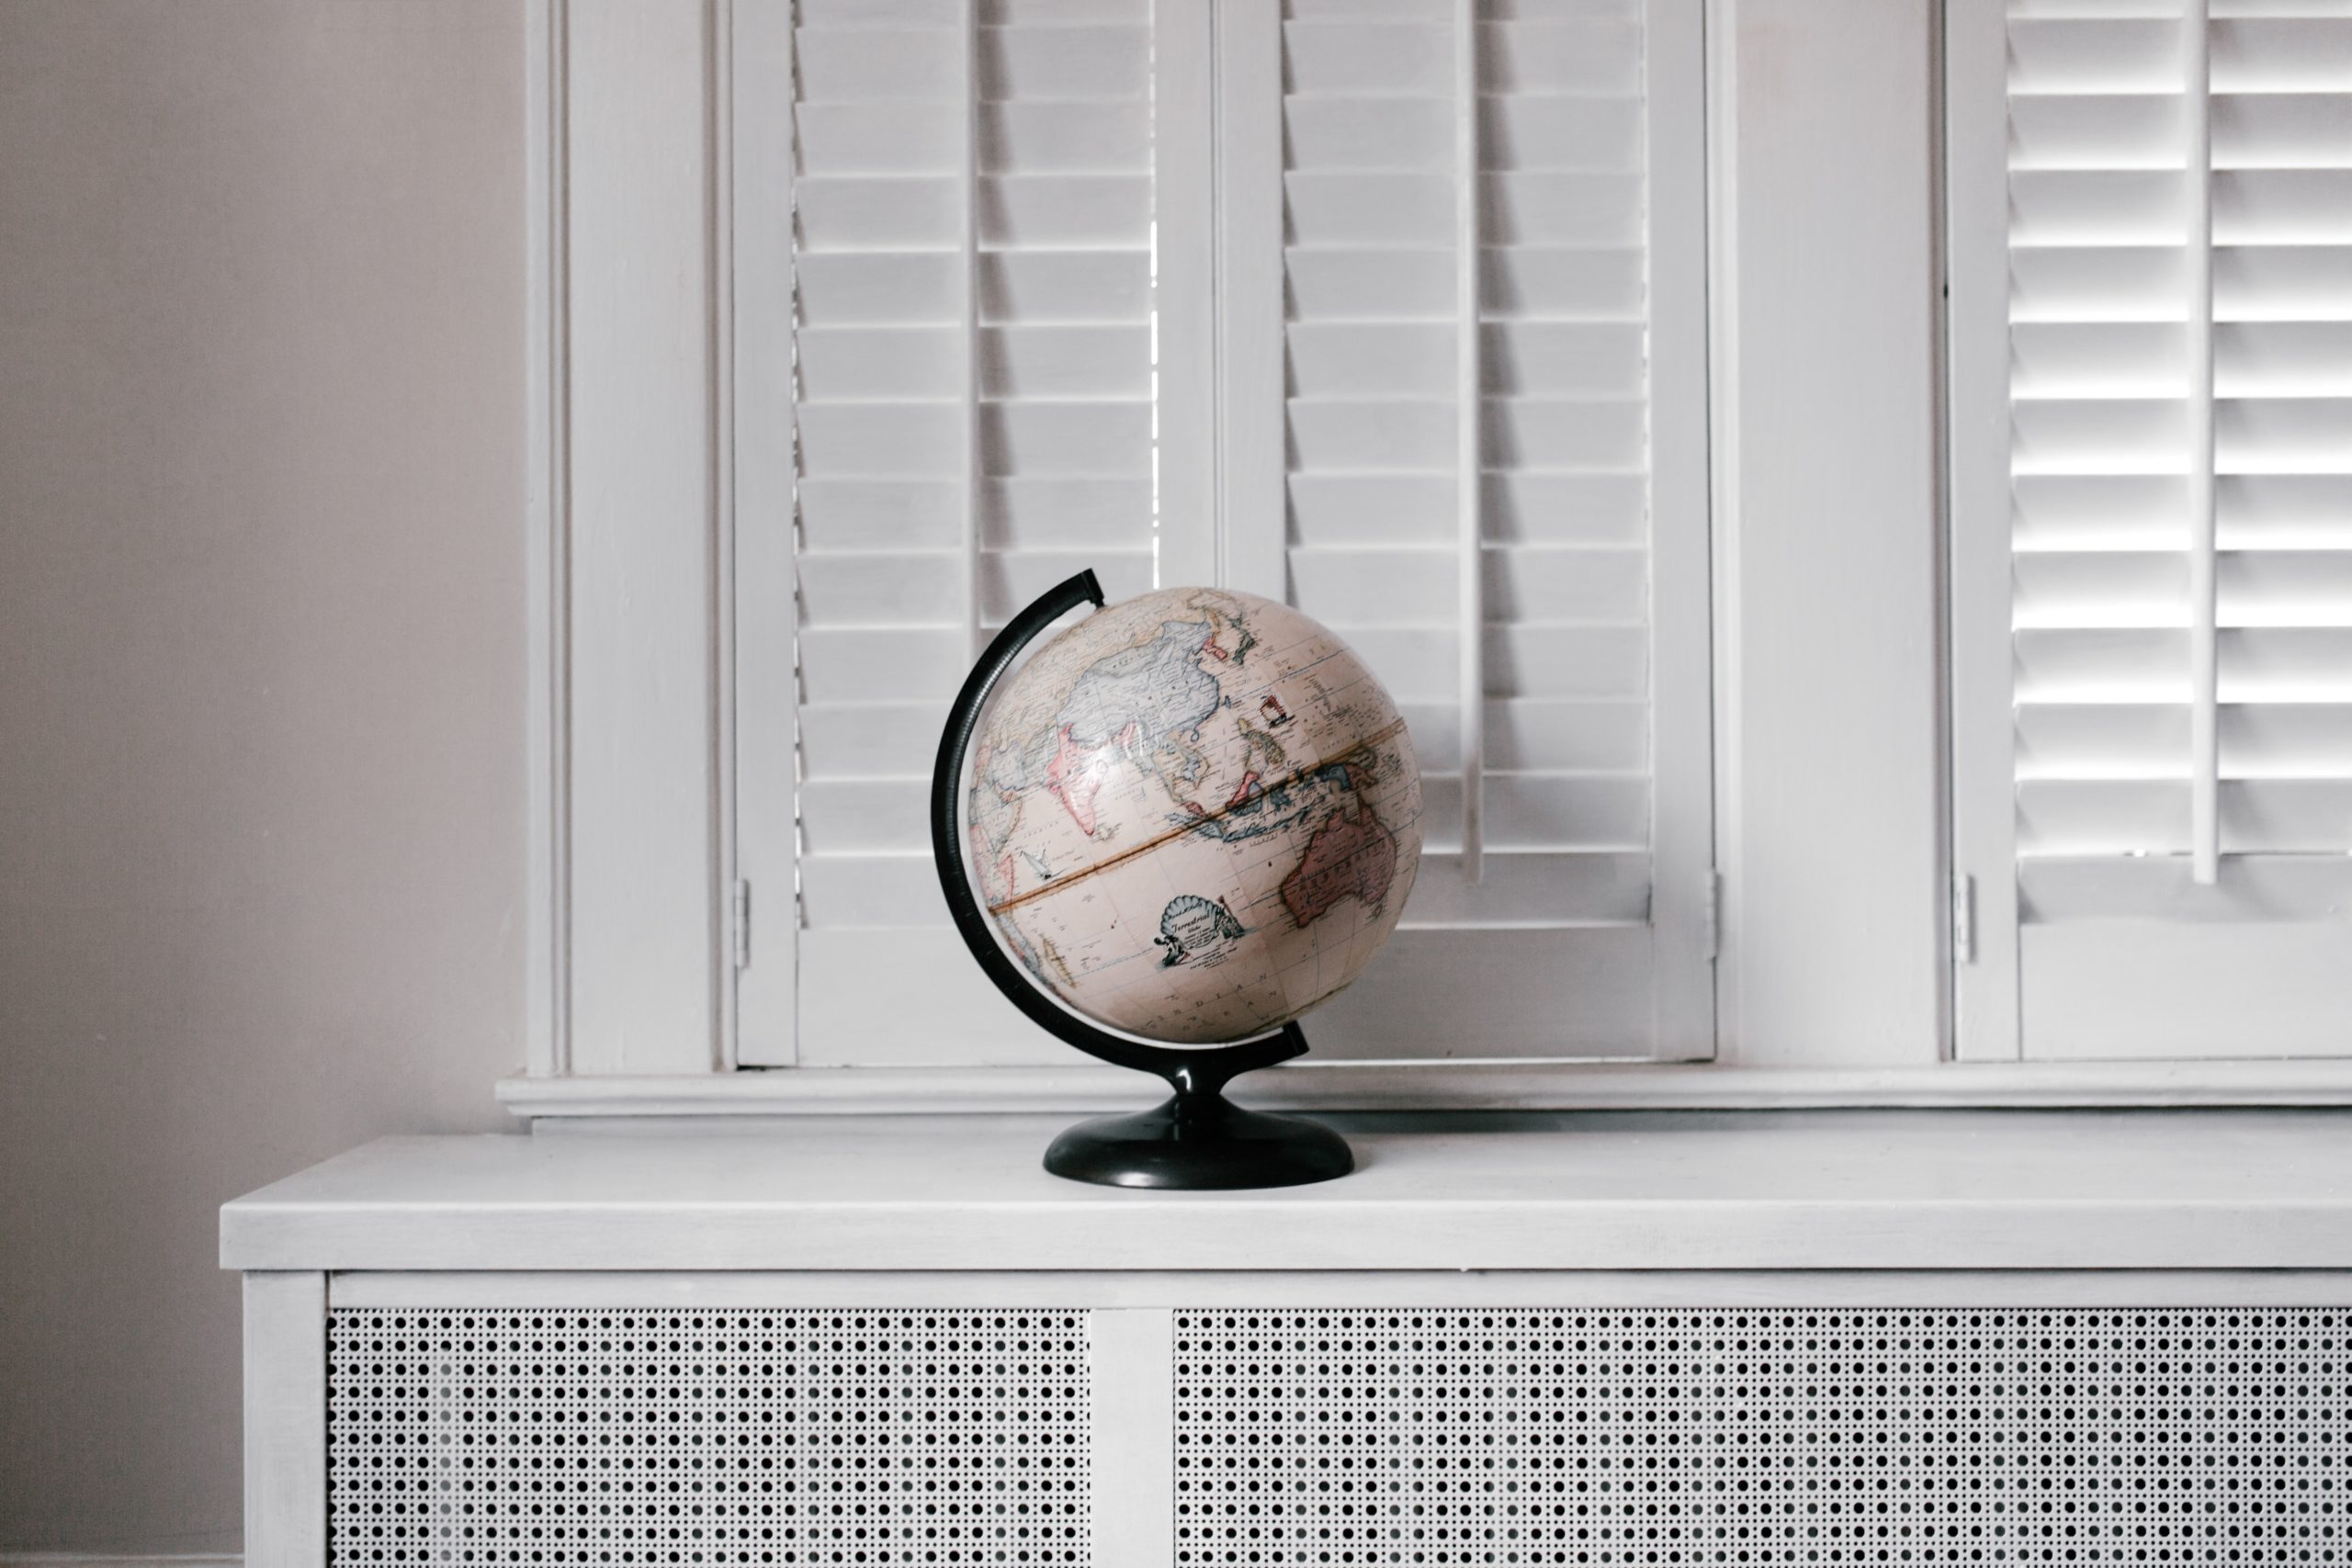 globe on a shelf